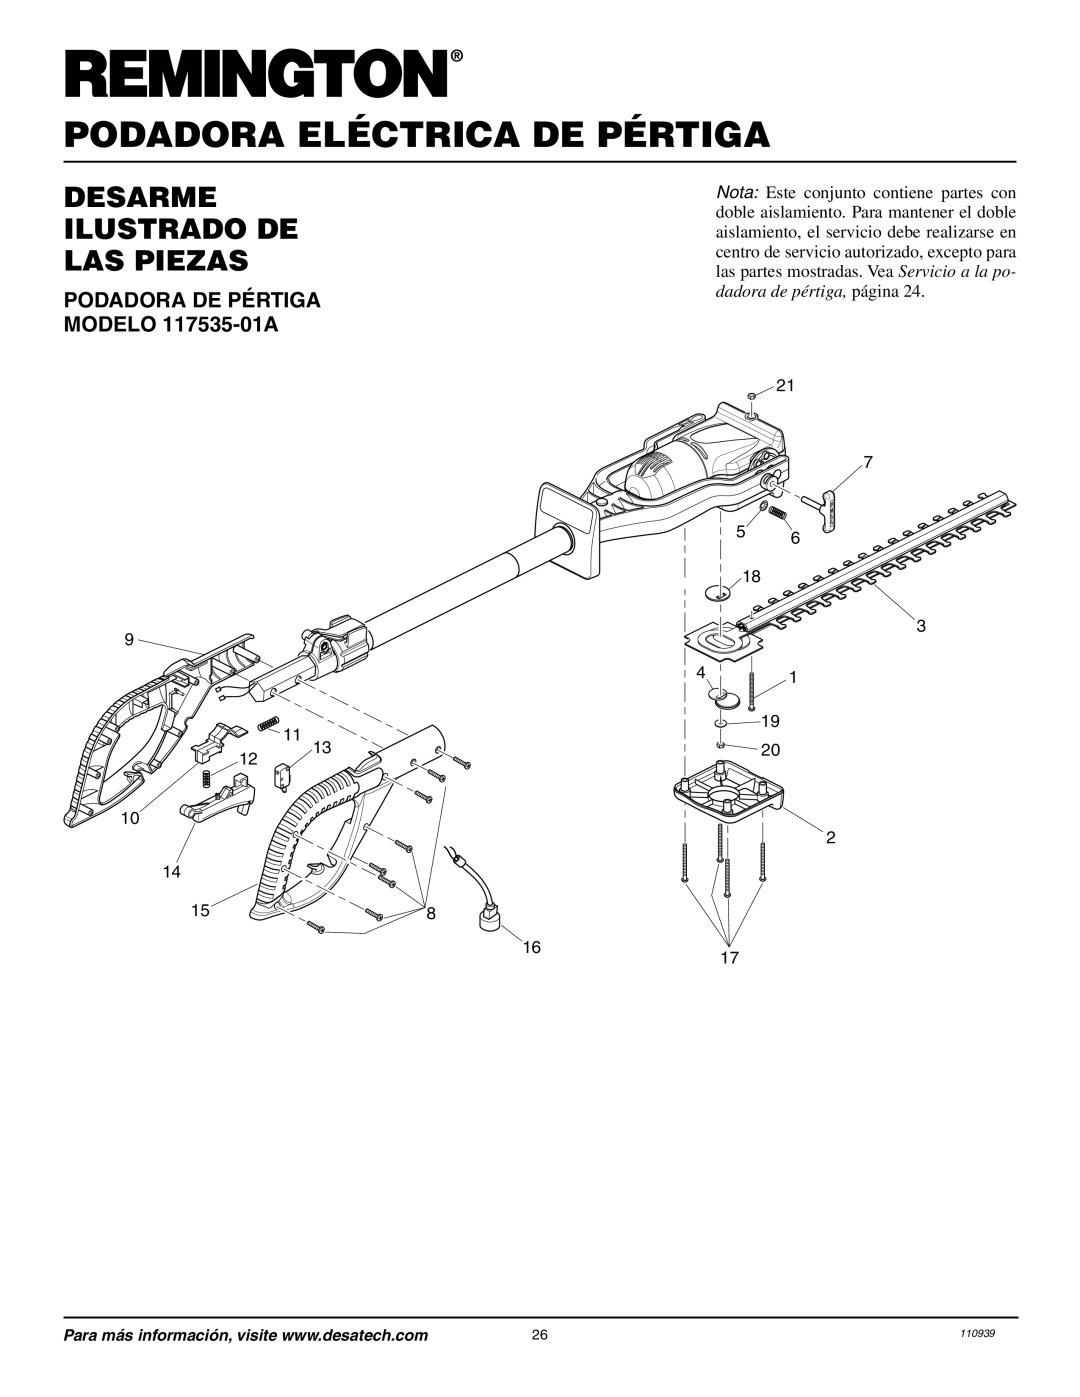 Remington Power Tools owner manual Desarme Ilustrado De Las Piezas, PODADORA DE PÉRTIGA MODELO 117535-01A, 110939 